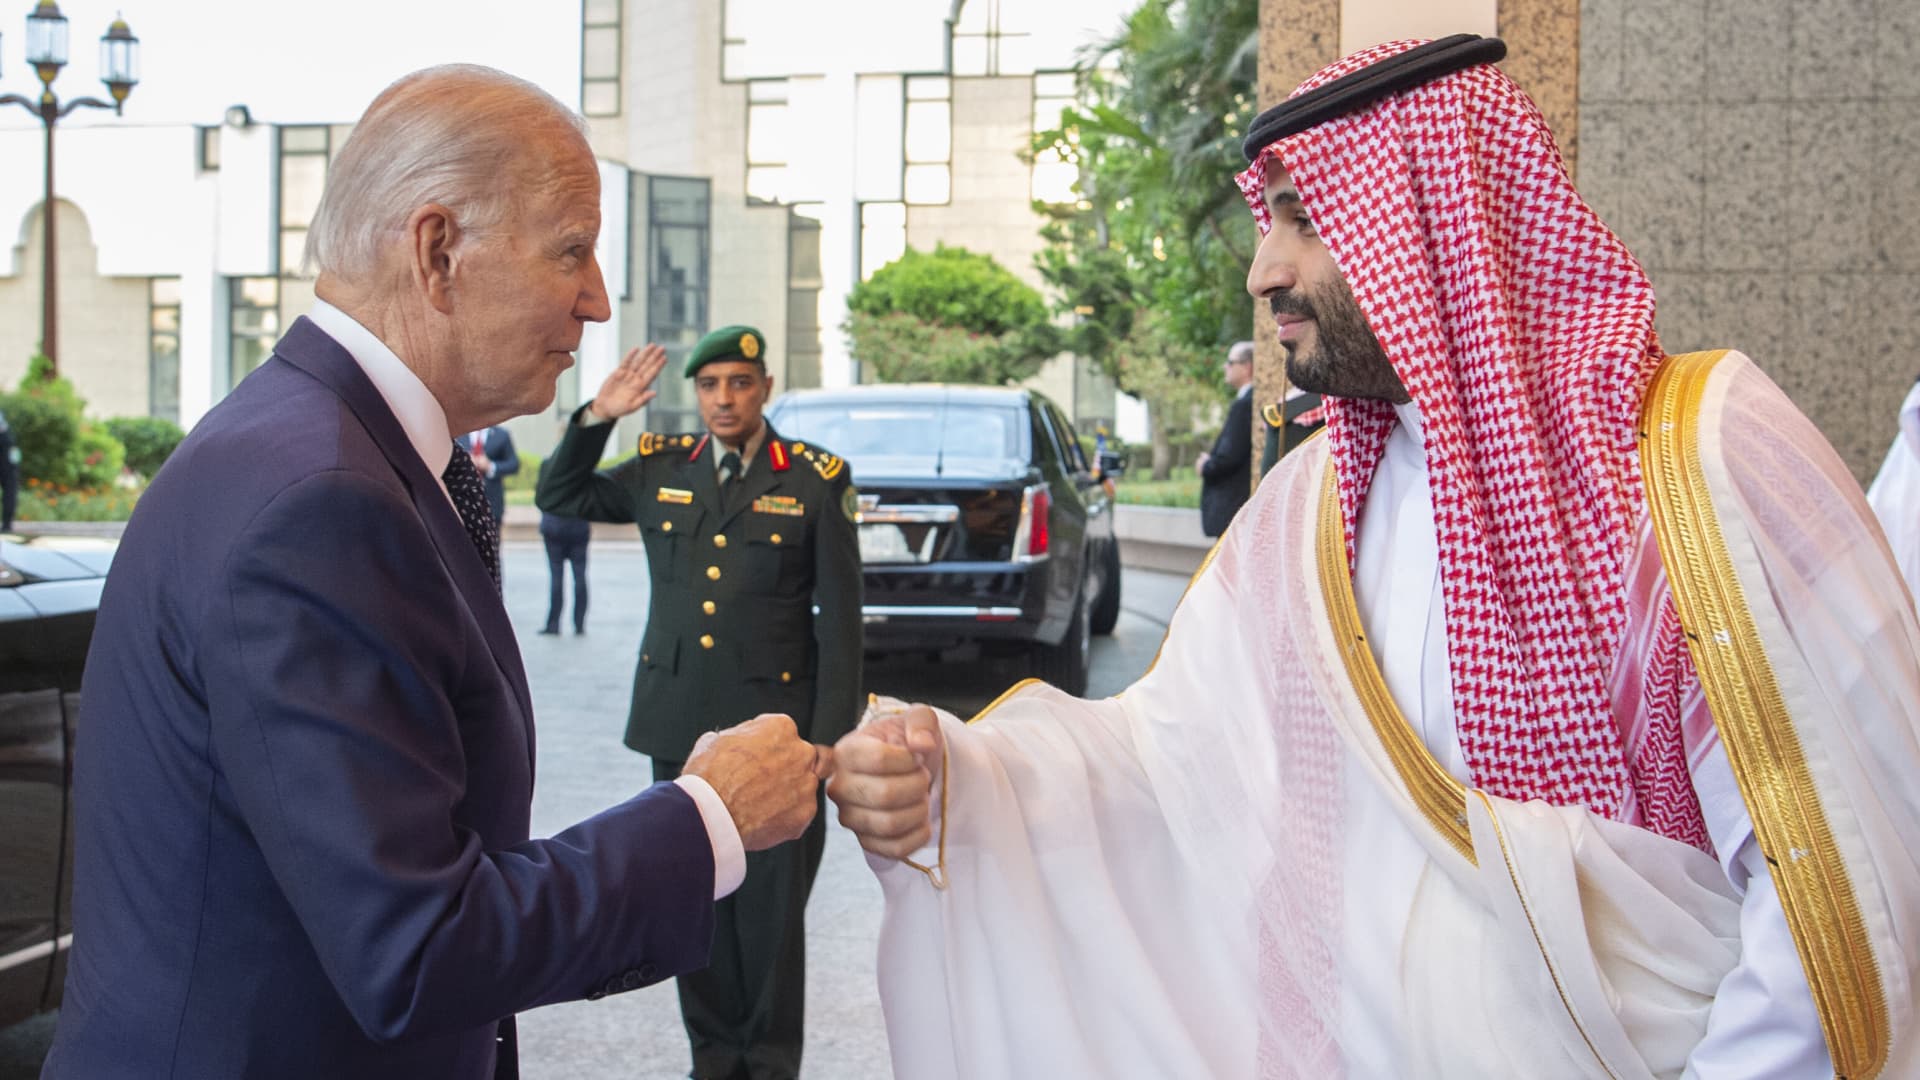 US President Joe Biden being welcomed by Saudi Arabian Crown Prince Mohammed bin Salman at Alsalam Royal Palace in Jeddah, Saudi Arabia on July 15, 2022.